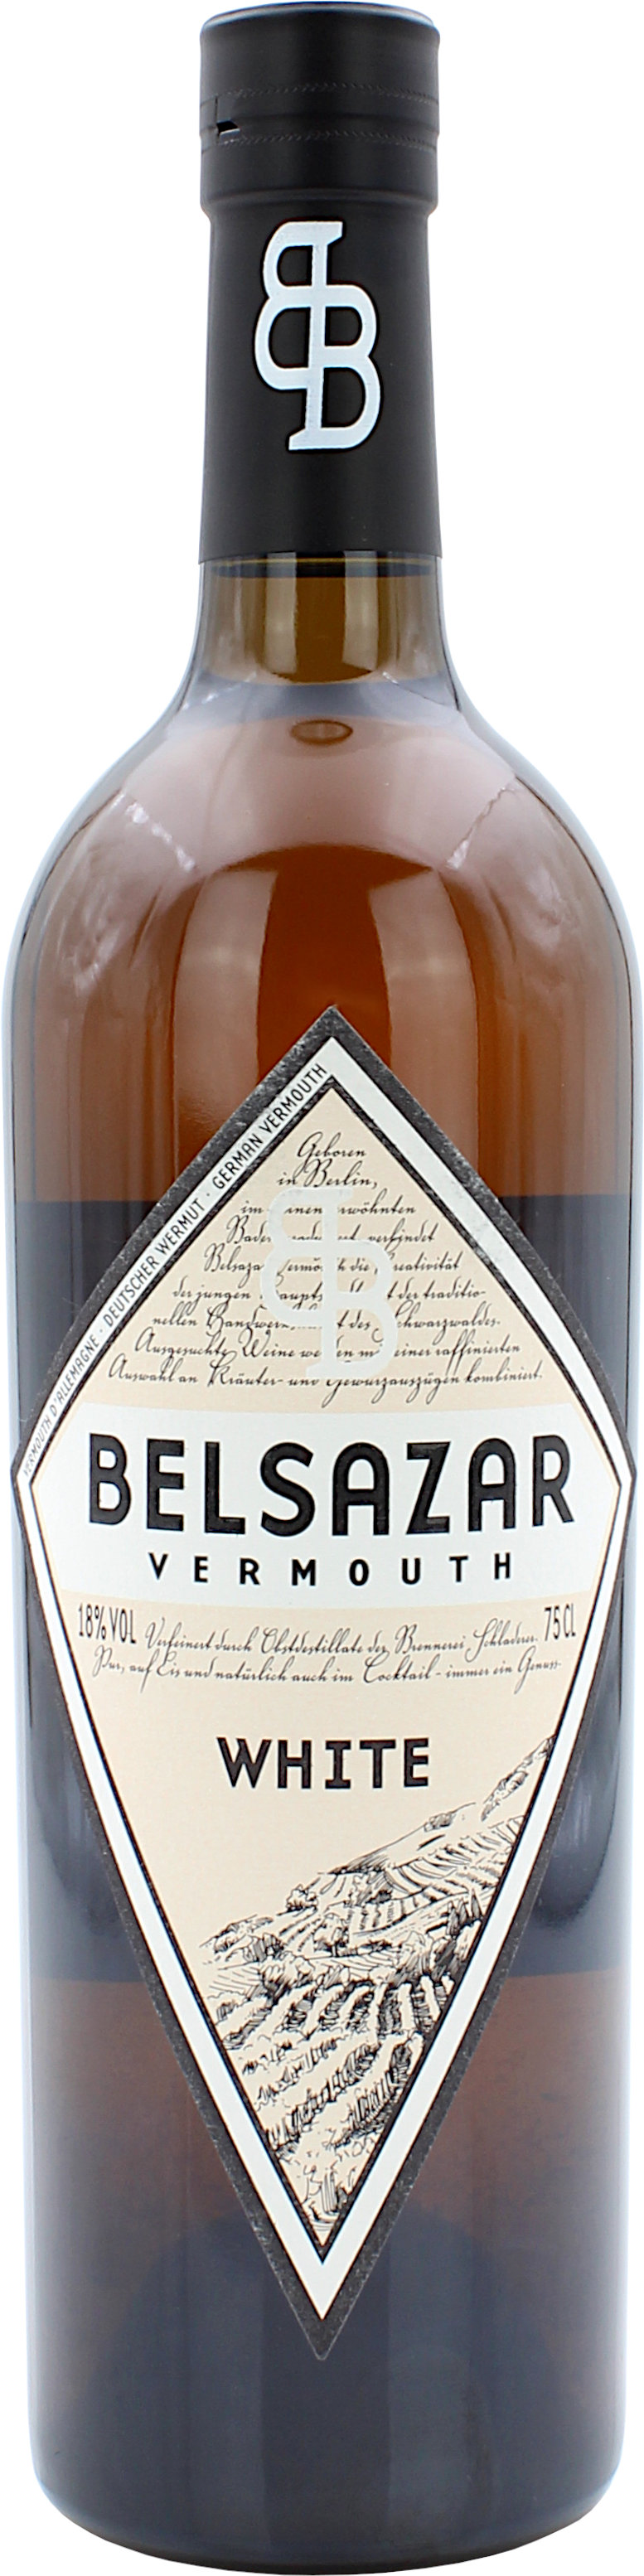 Belsazar Vermouth White 18.0% 0,75l